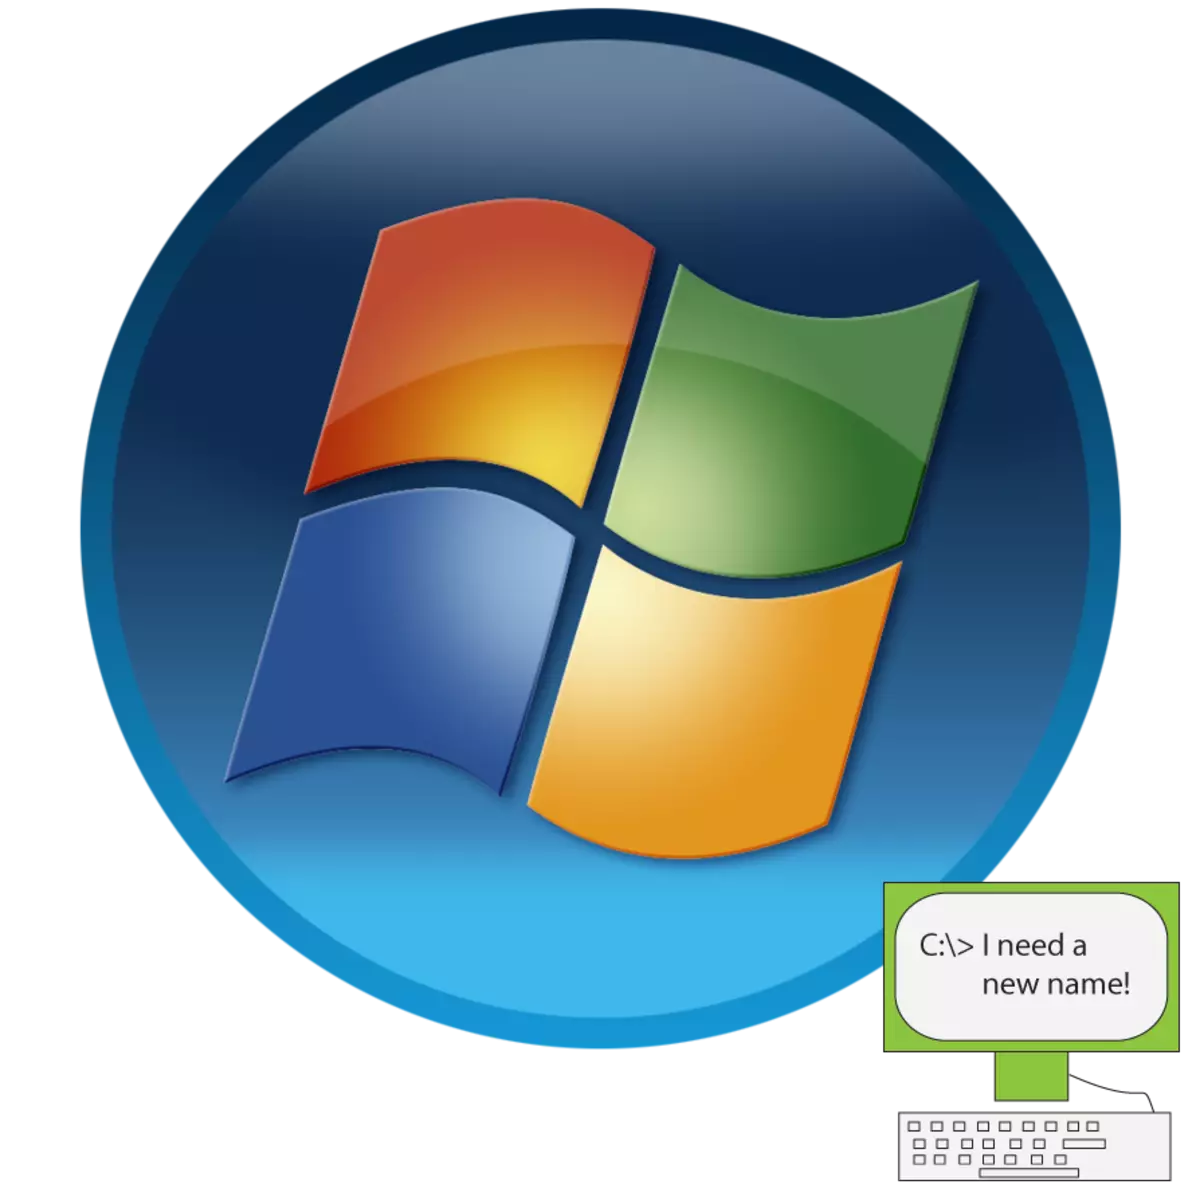 Computer Name Windows 7